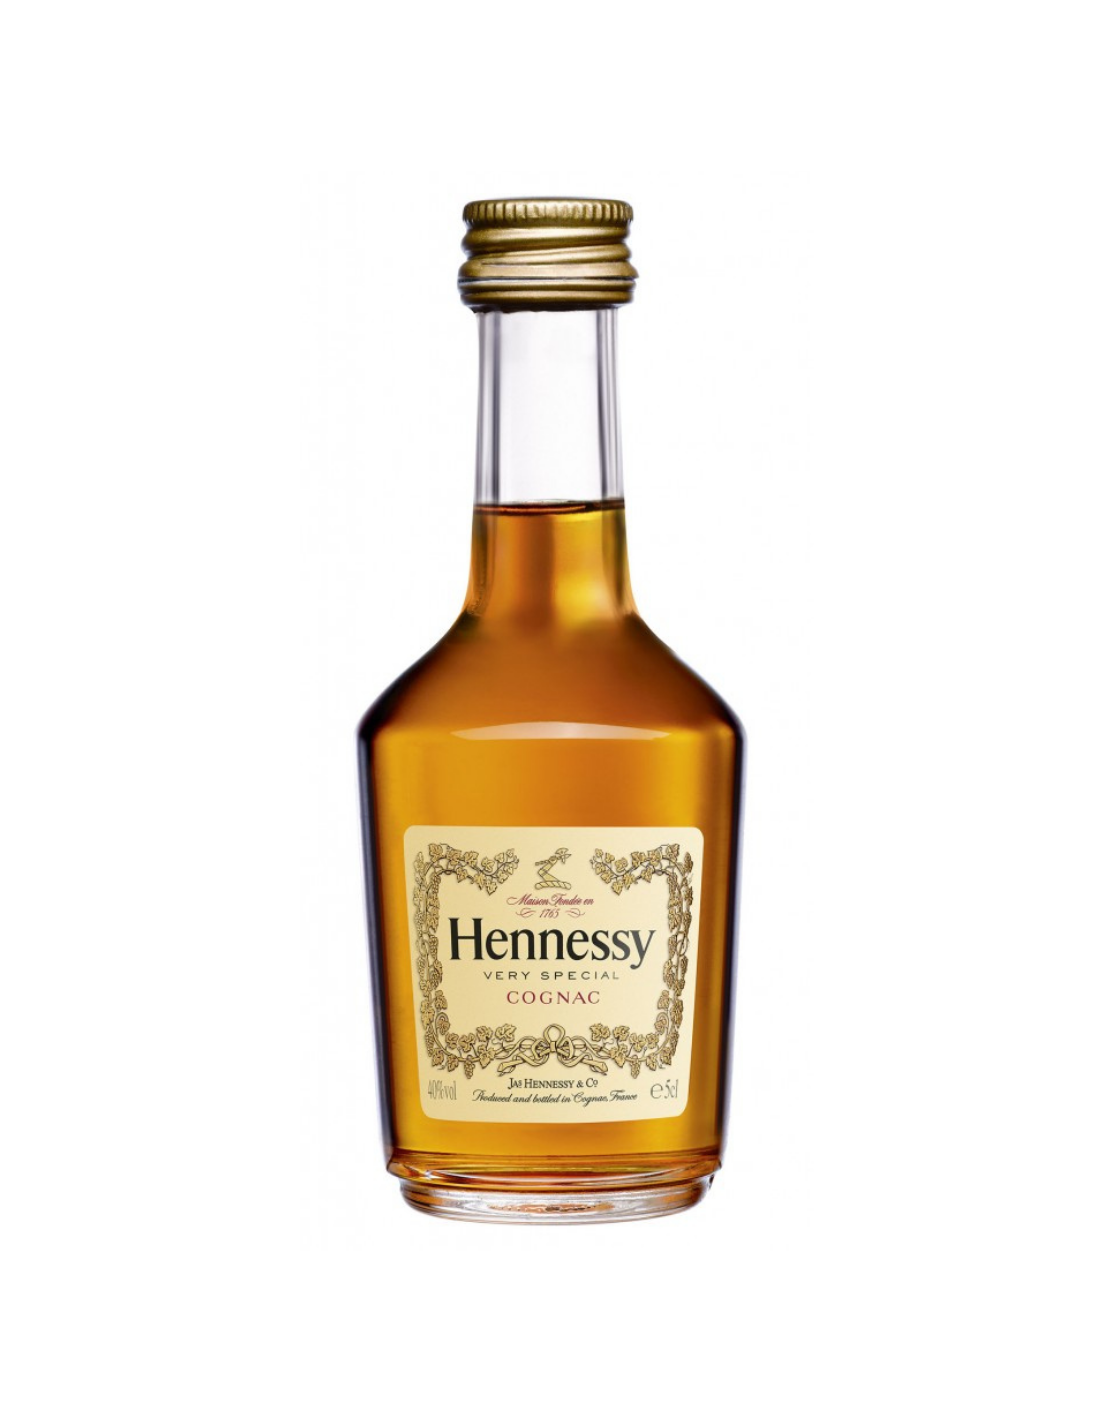 Coniac Hennessy VS, 40% alc., 0.05L, Franta alcooldiscount.ro